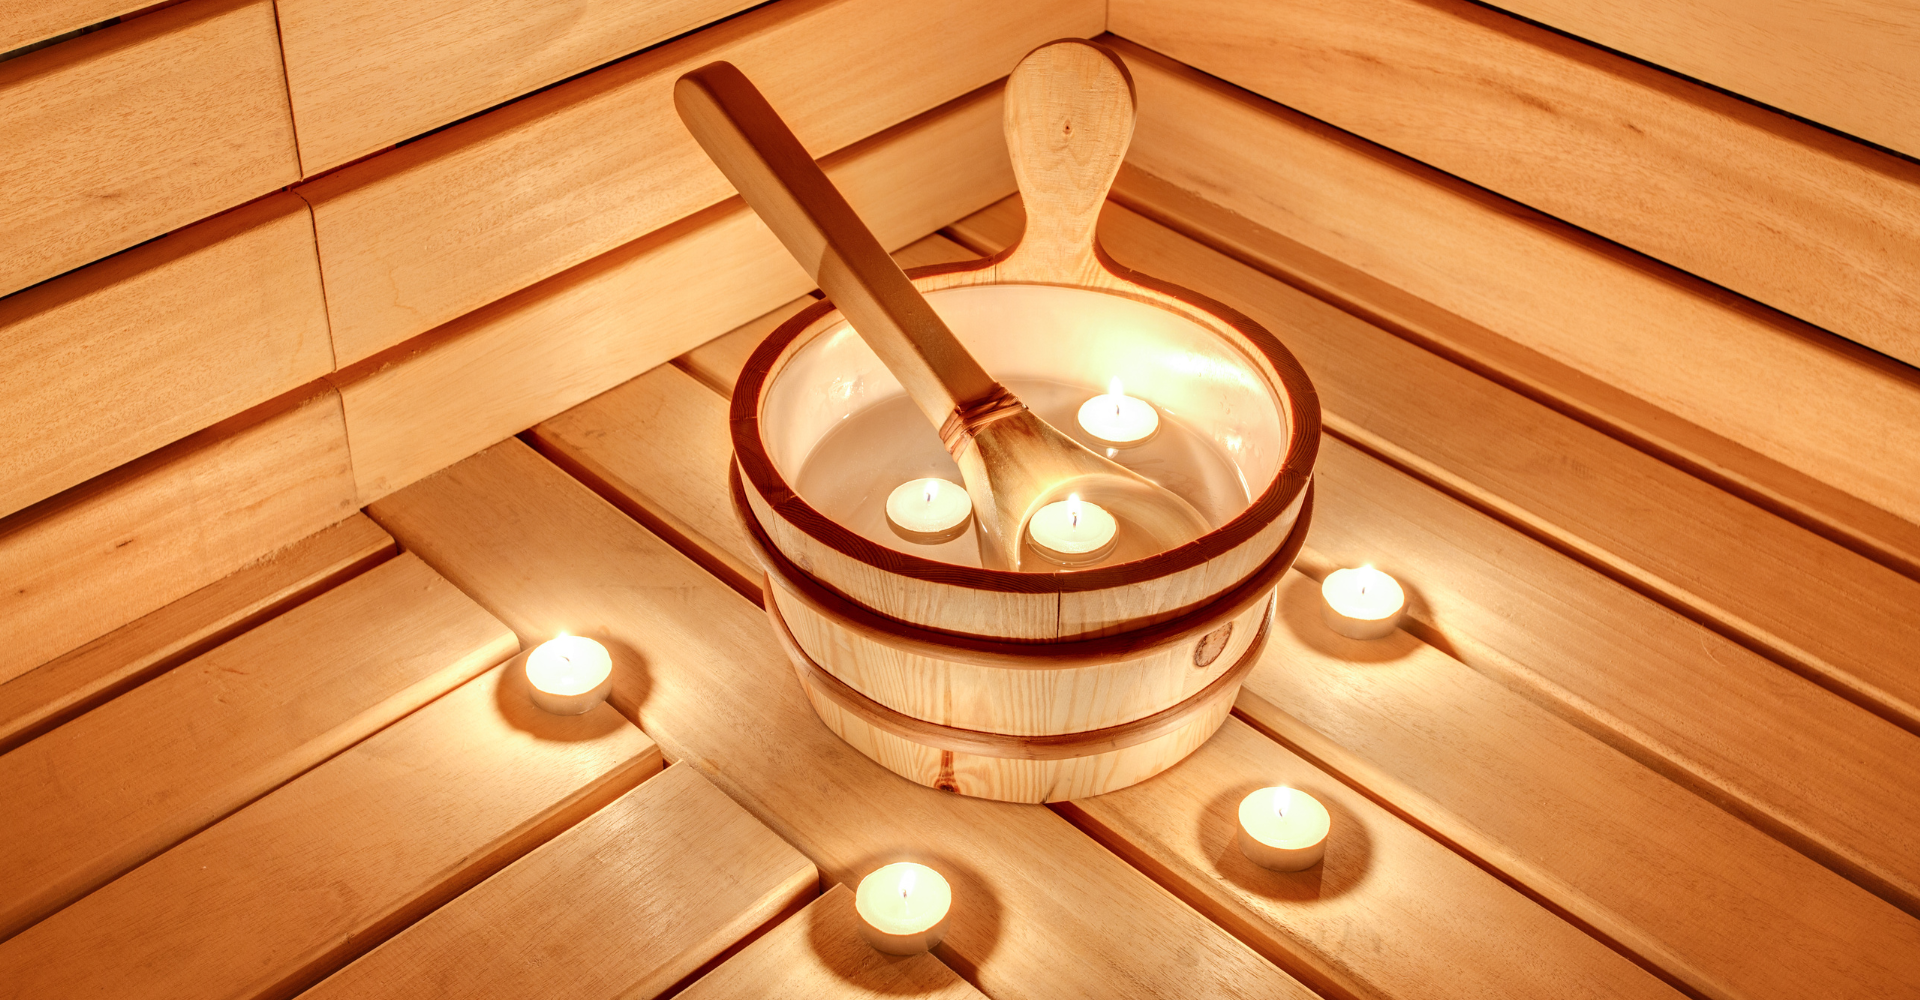 How Long Should You Sauna For Detoxification Benefits?